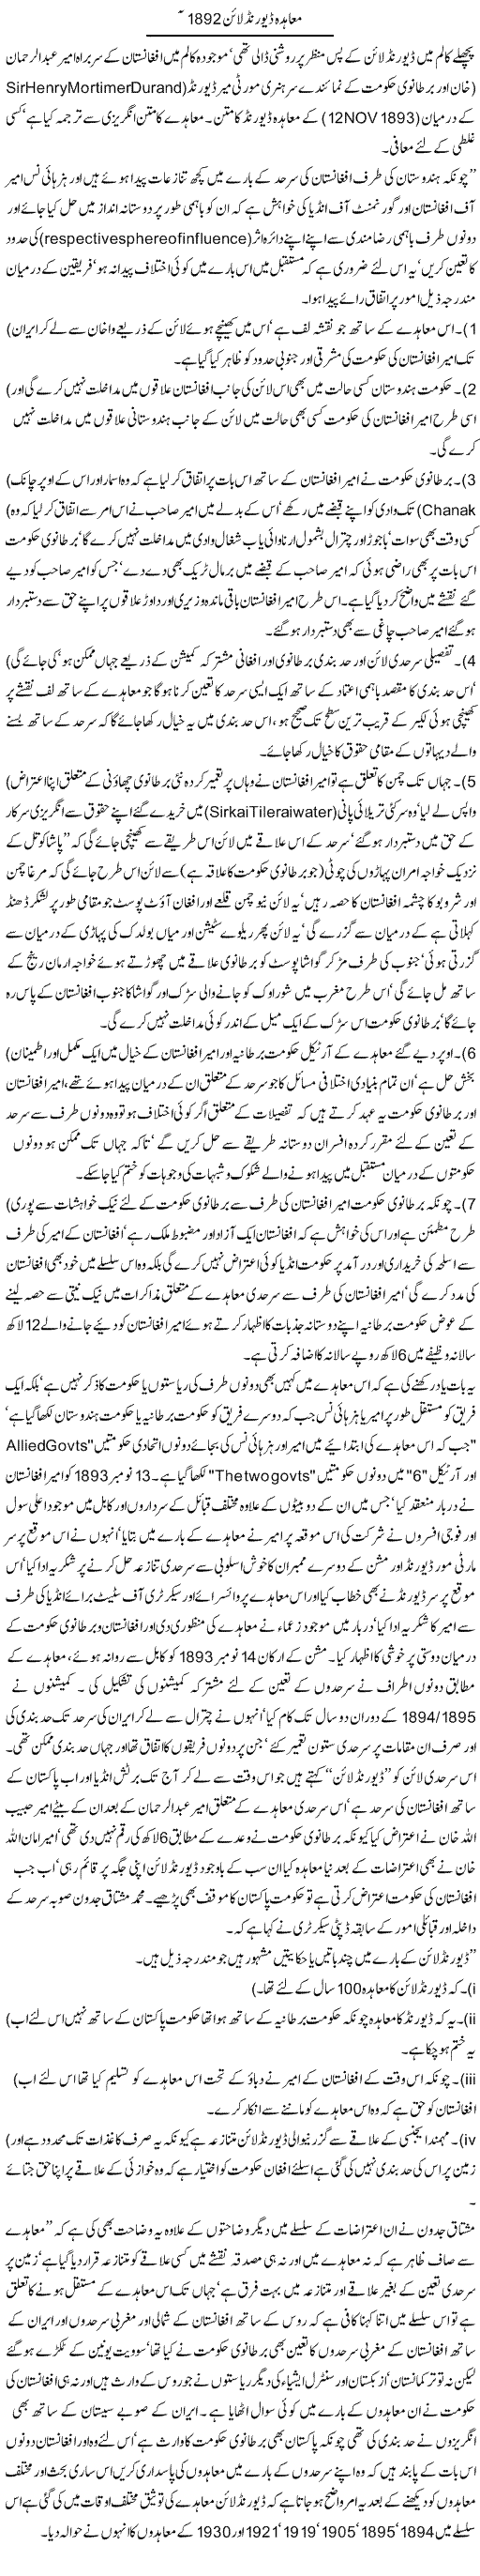 Muahida Durand Line 1893 | Jamil Marghuz | Daily Urdu Columns